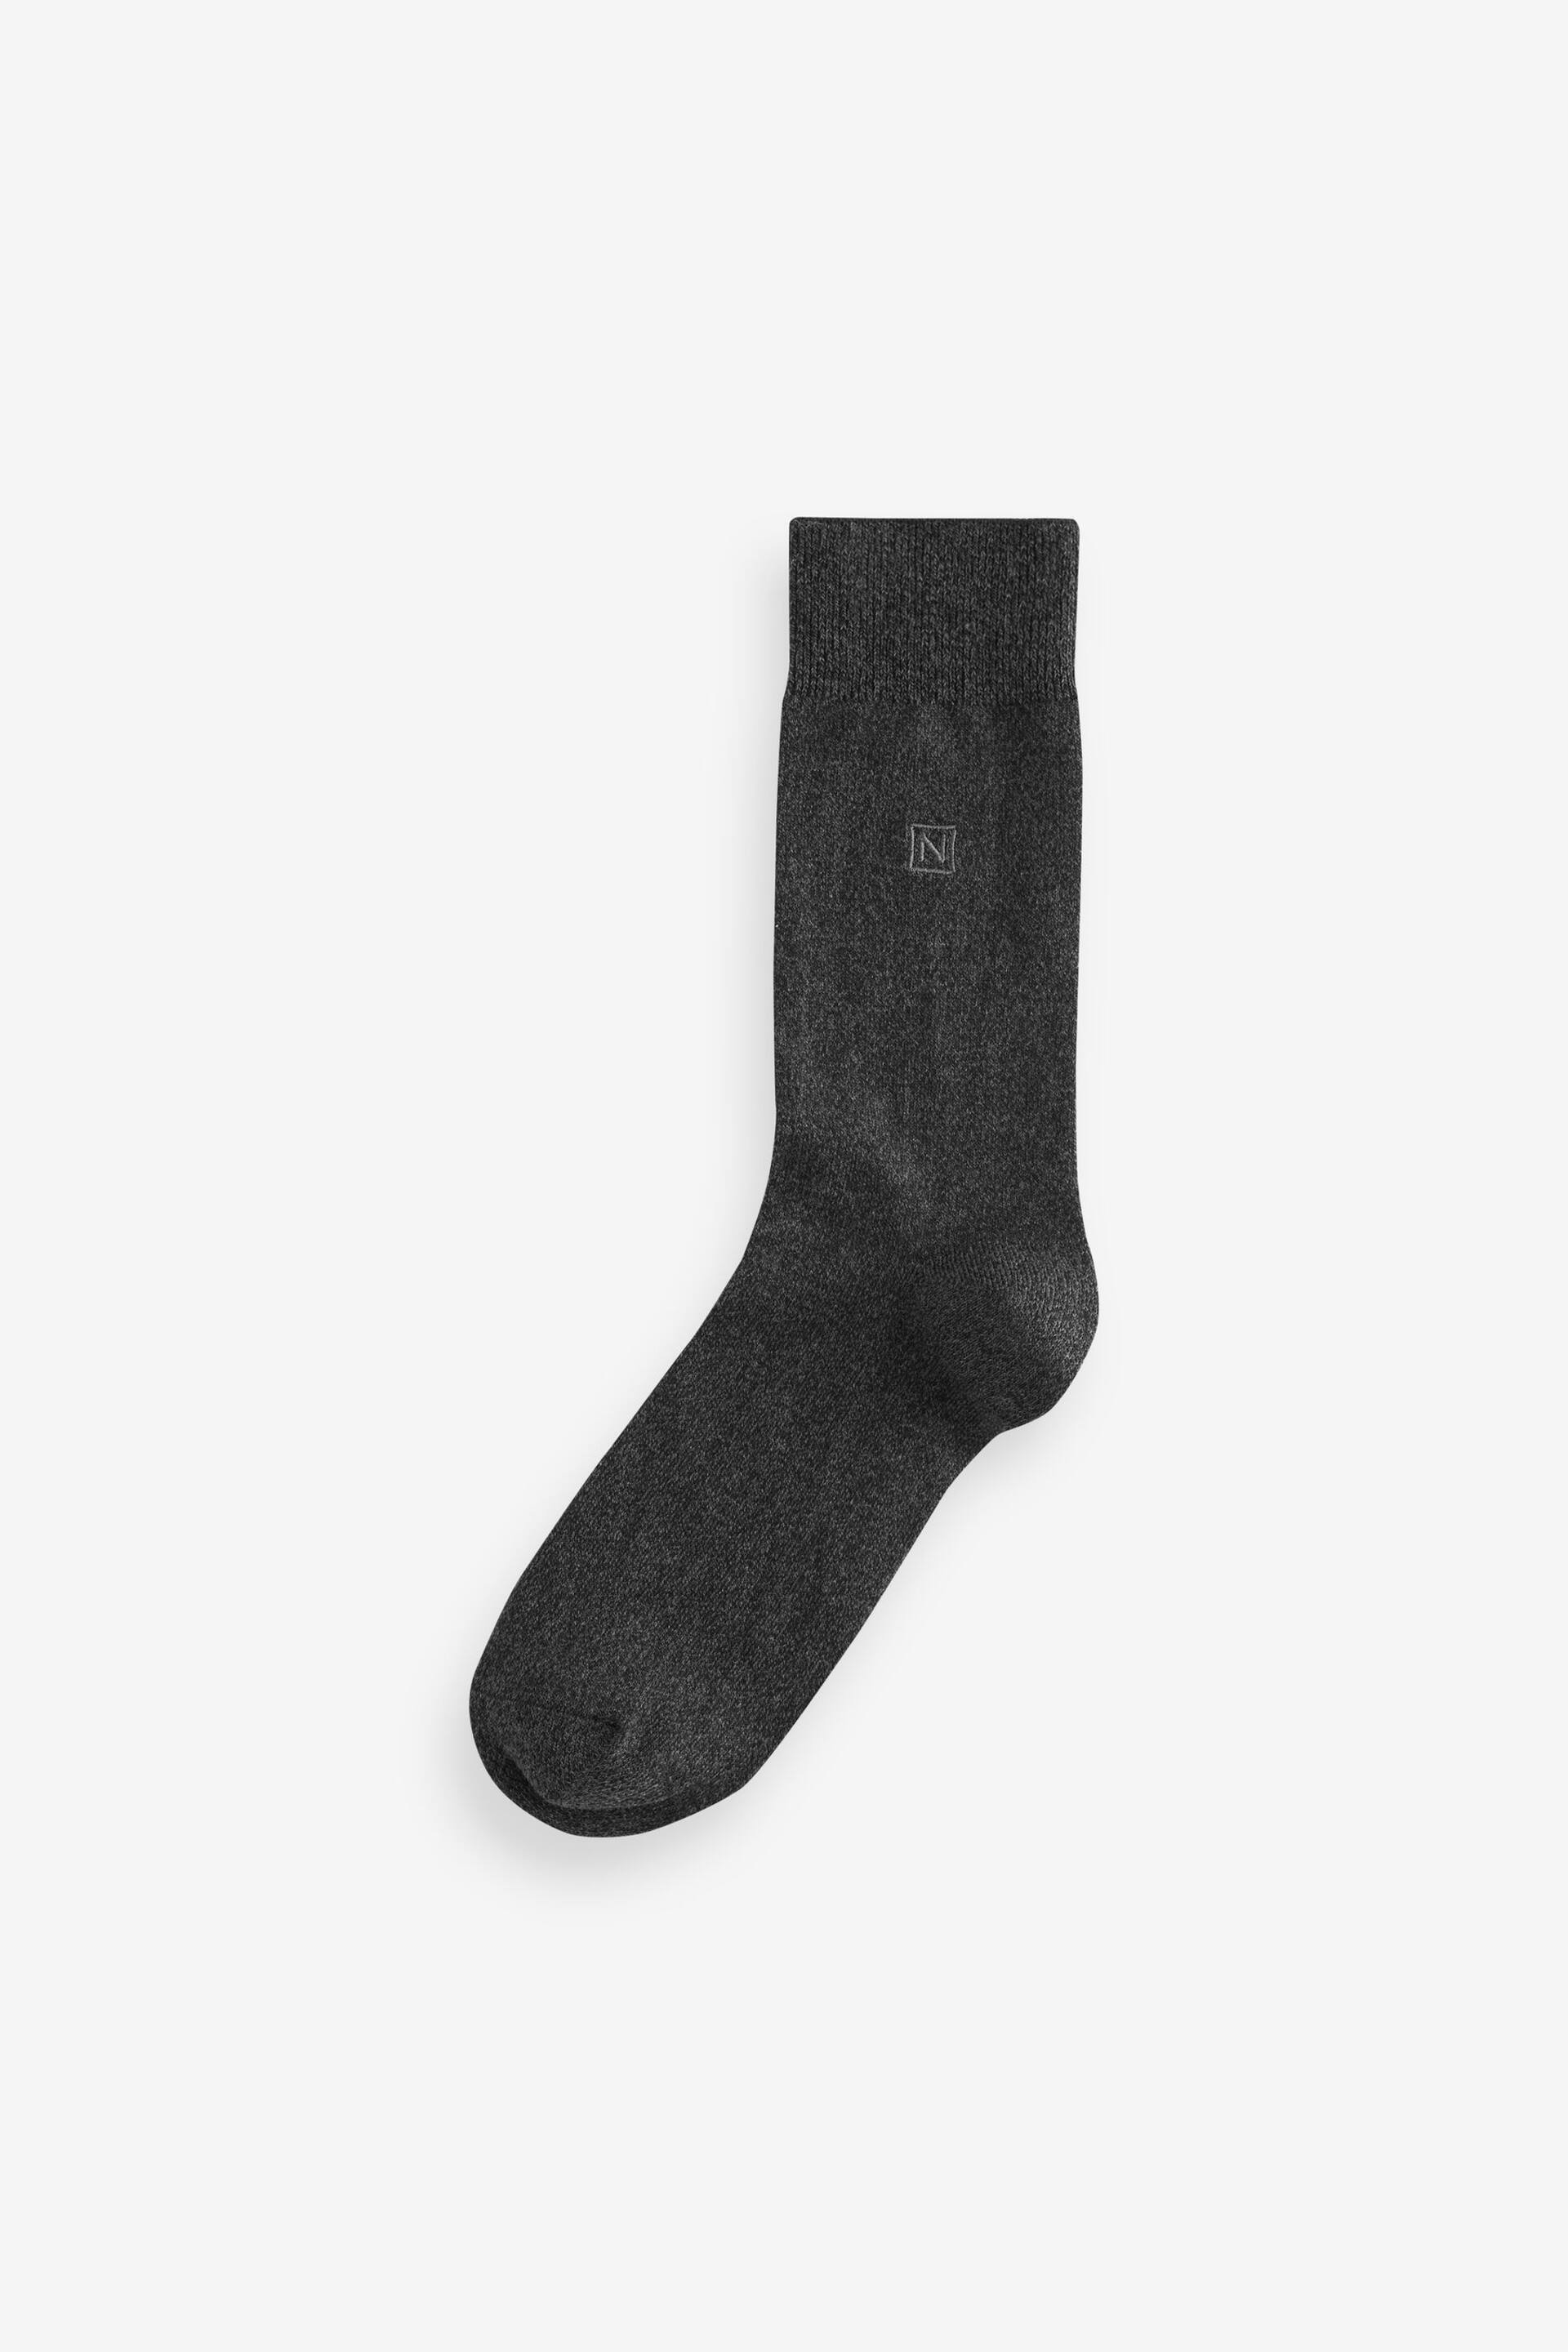 Black/Grey 10 Pack Embroidered Lasting Fresh Socks - Image 2 of 7